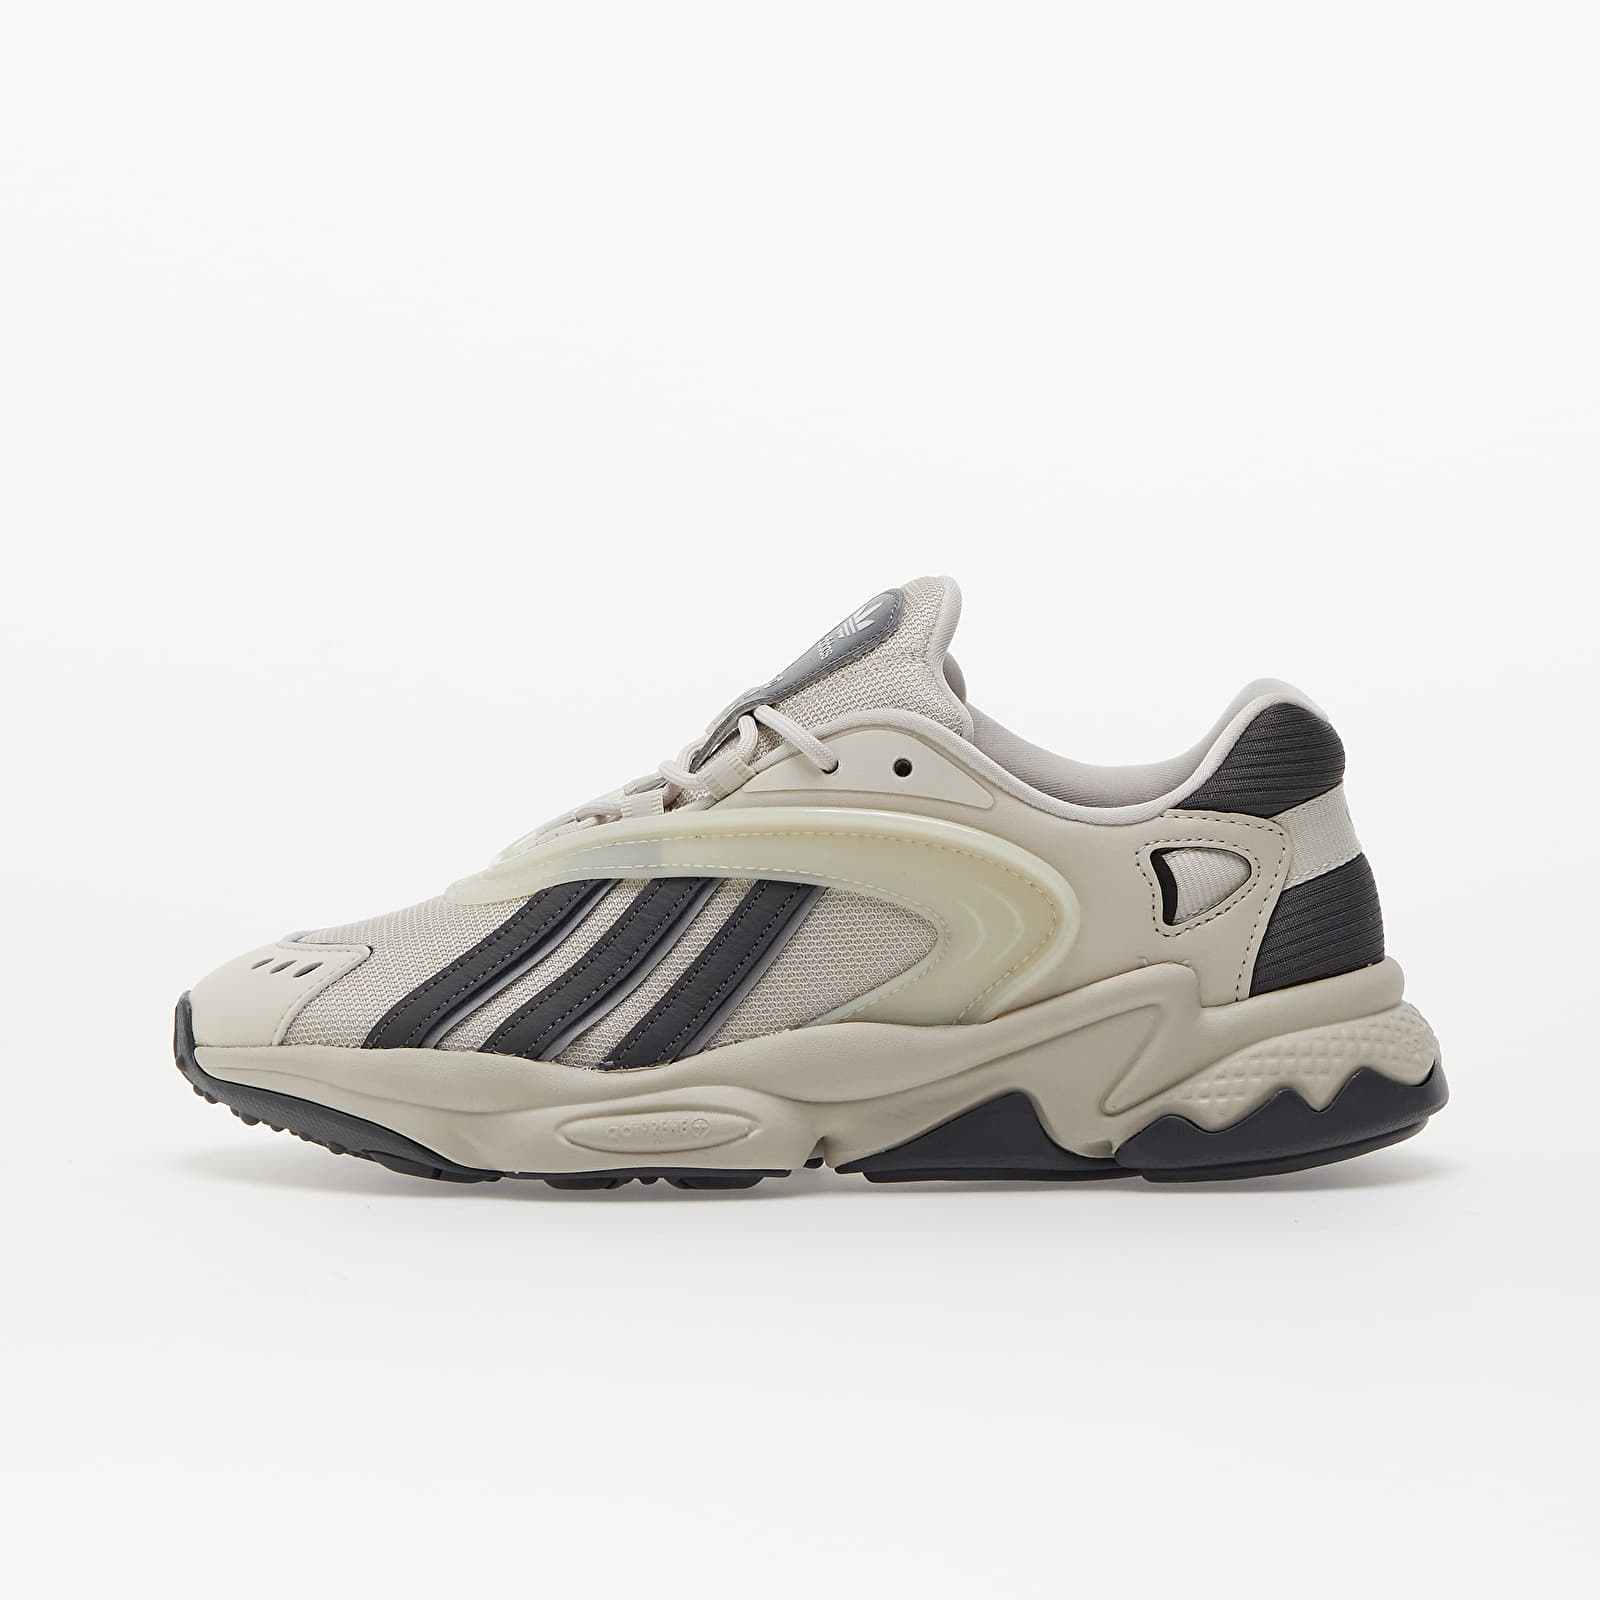 Men's shoes adidas Oztral Aluminium/ Grey Five/ Silver Metallic